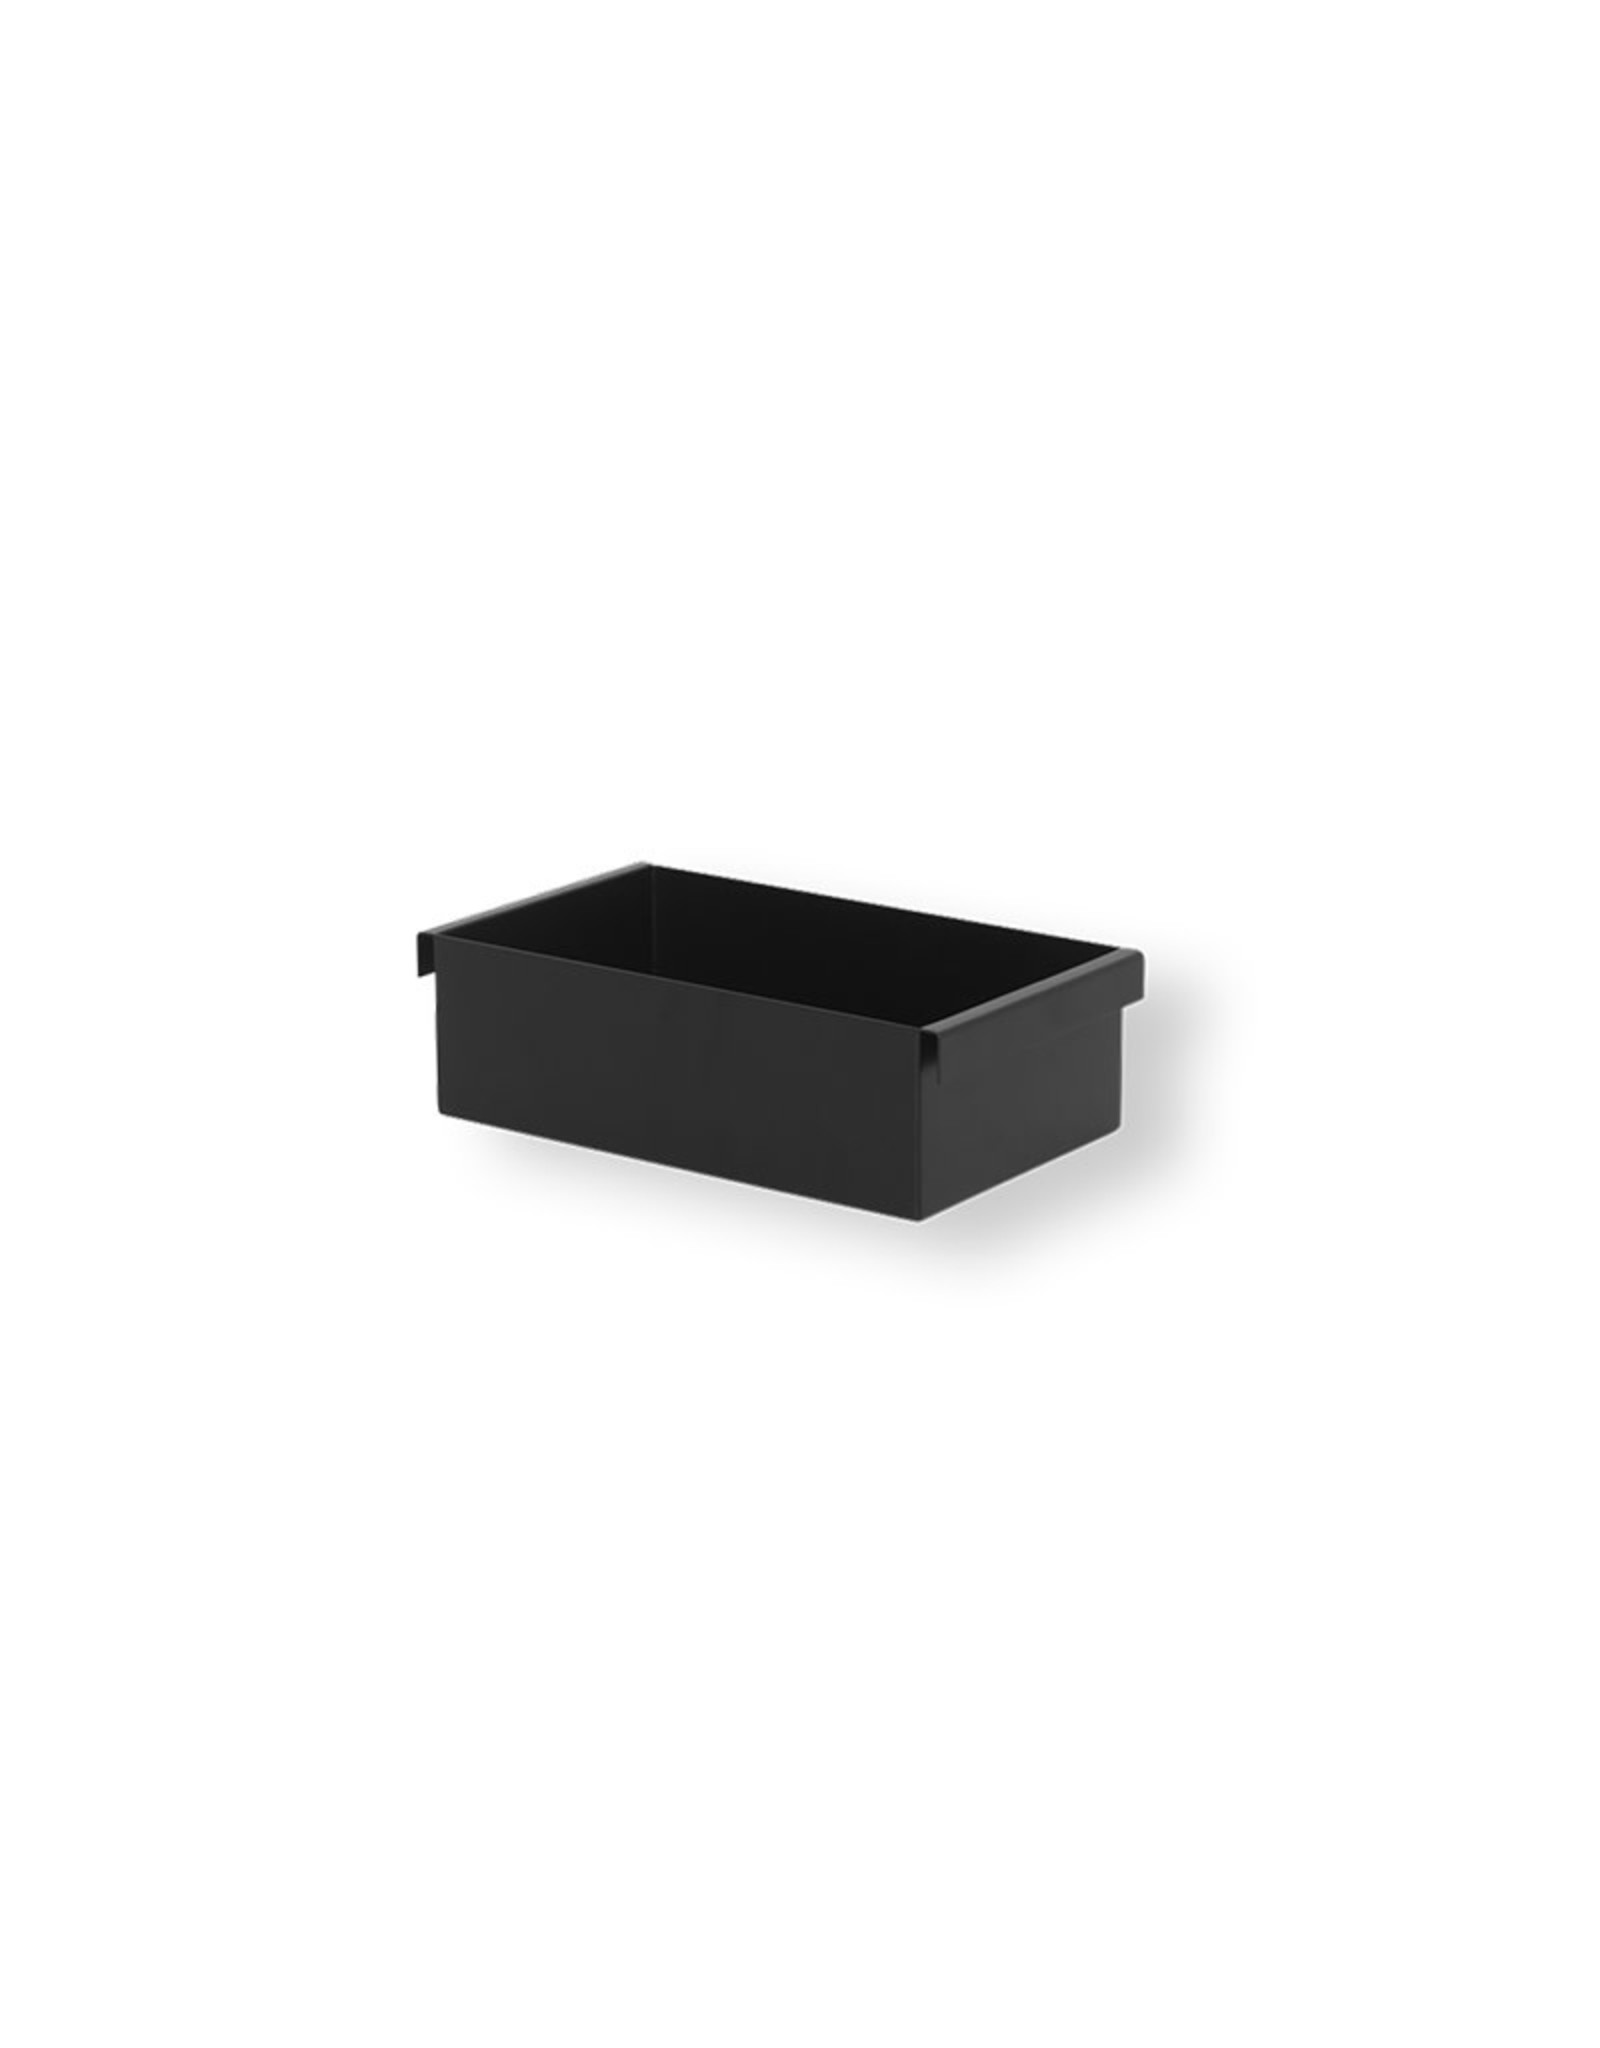 Ferm Living Plant Box Container | Black